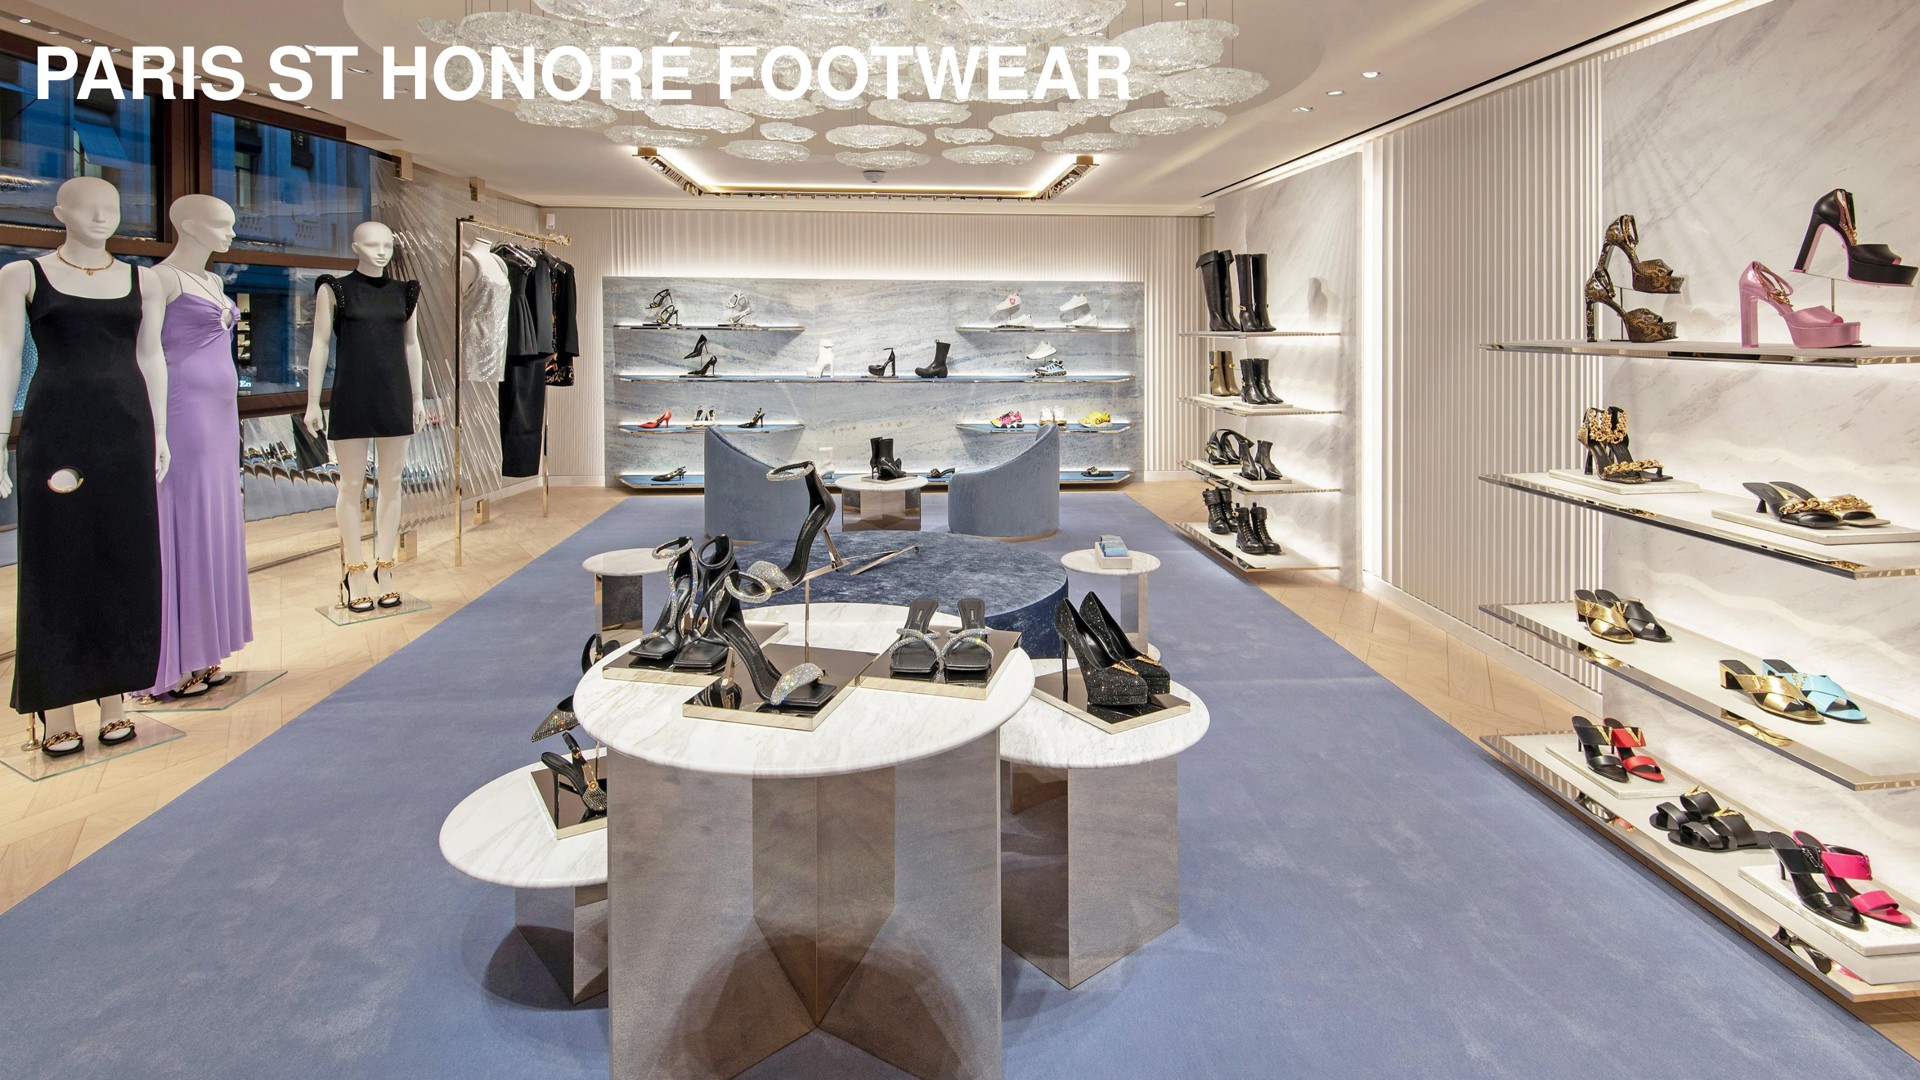 honor footwear | Capri Holdings